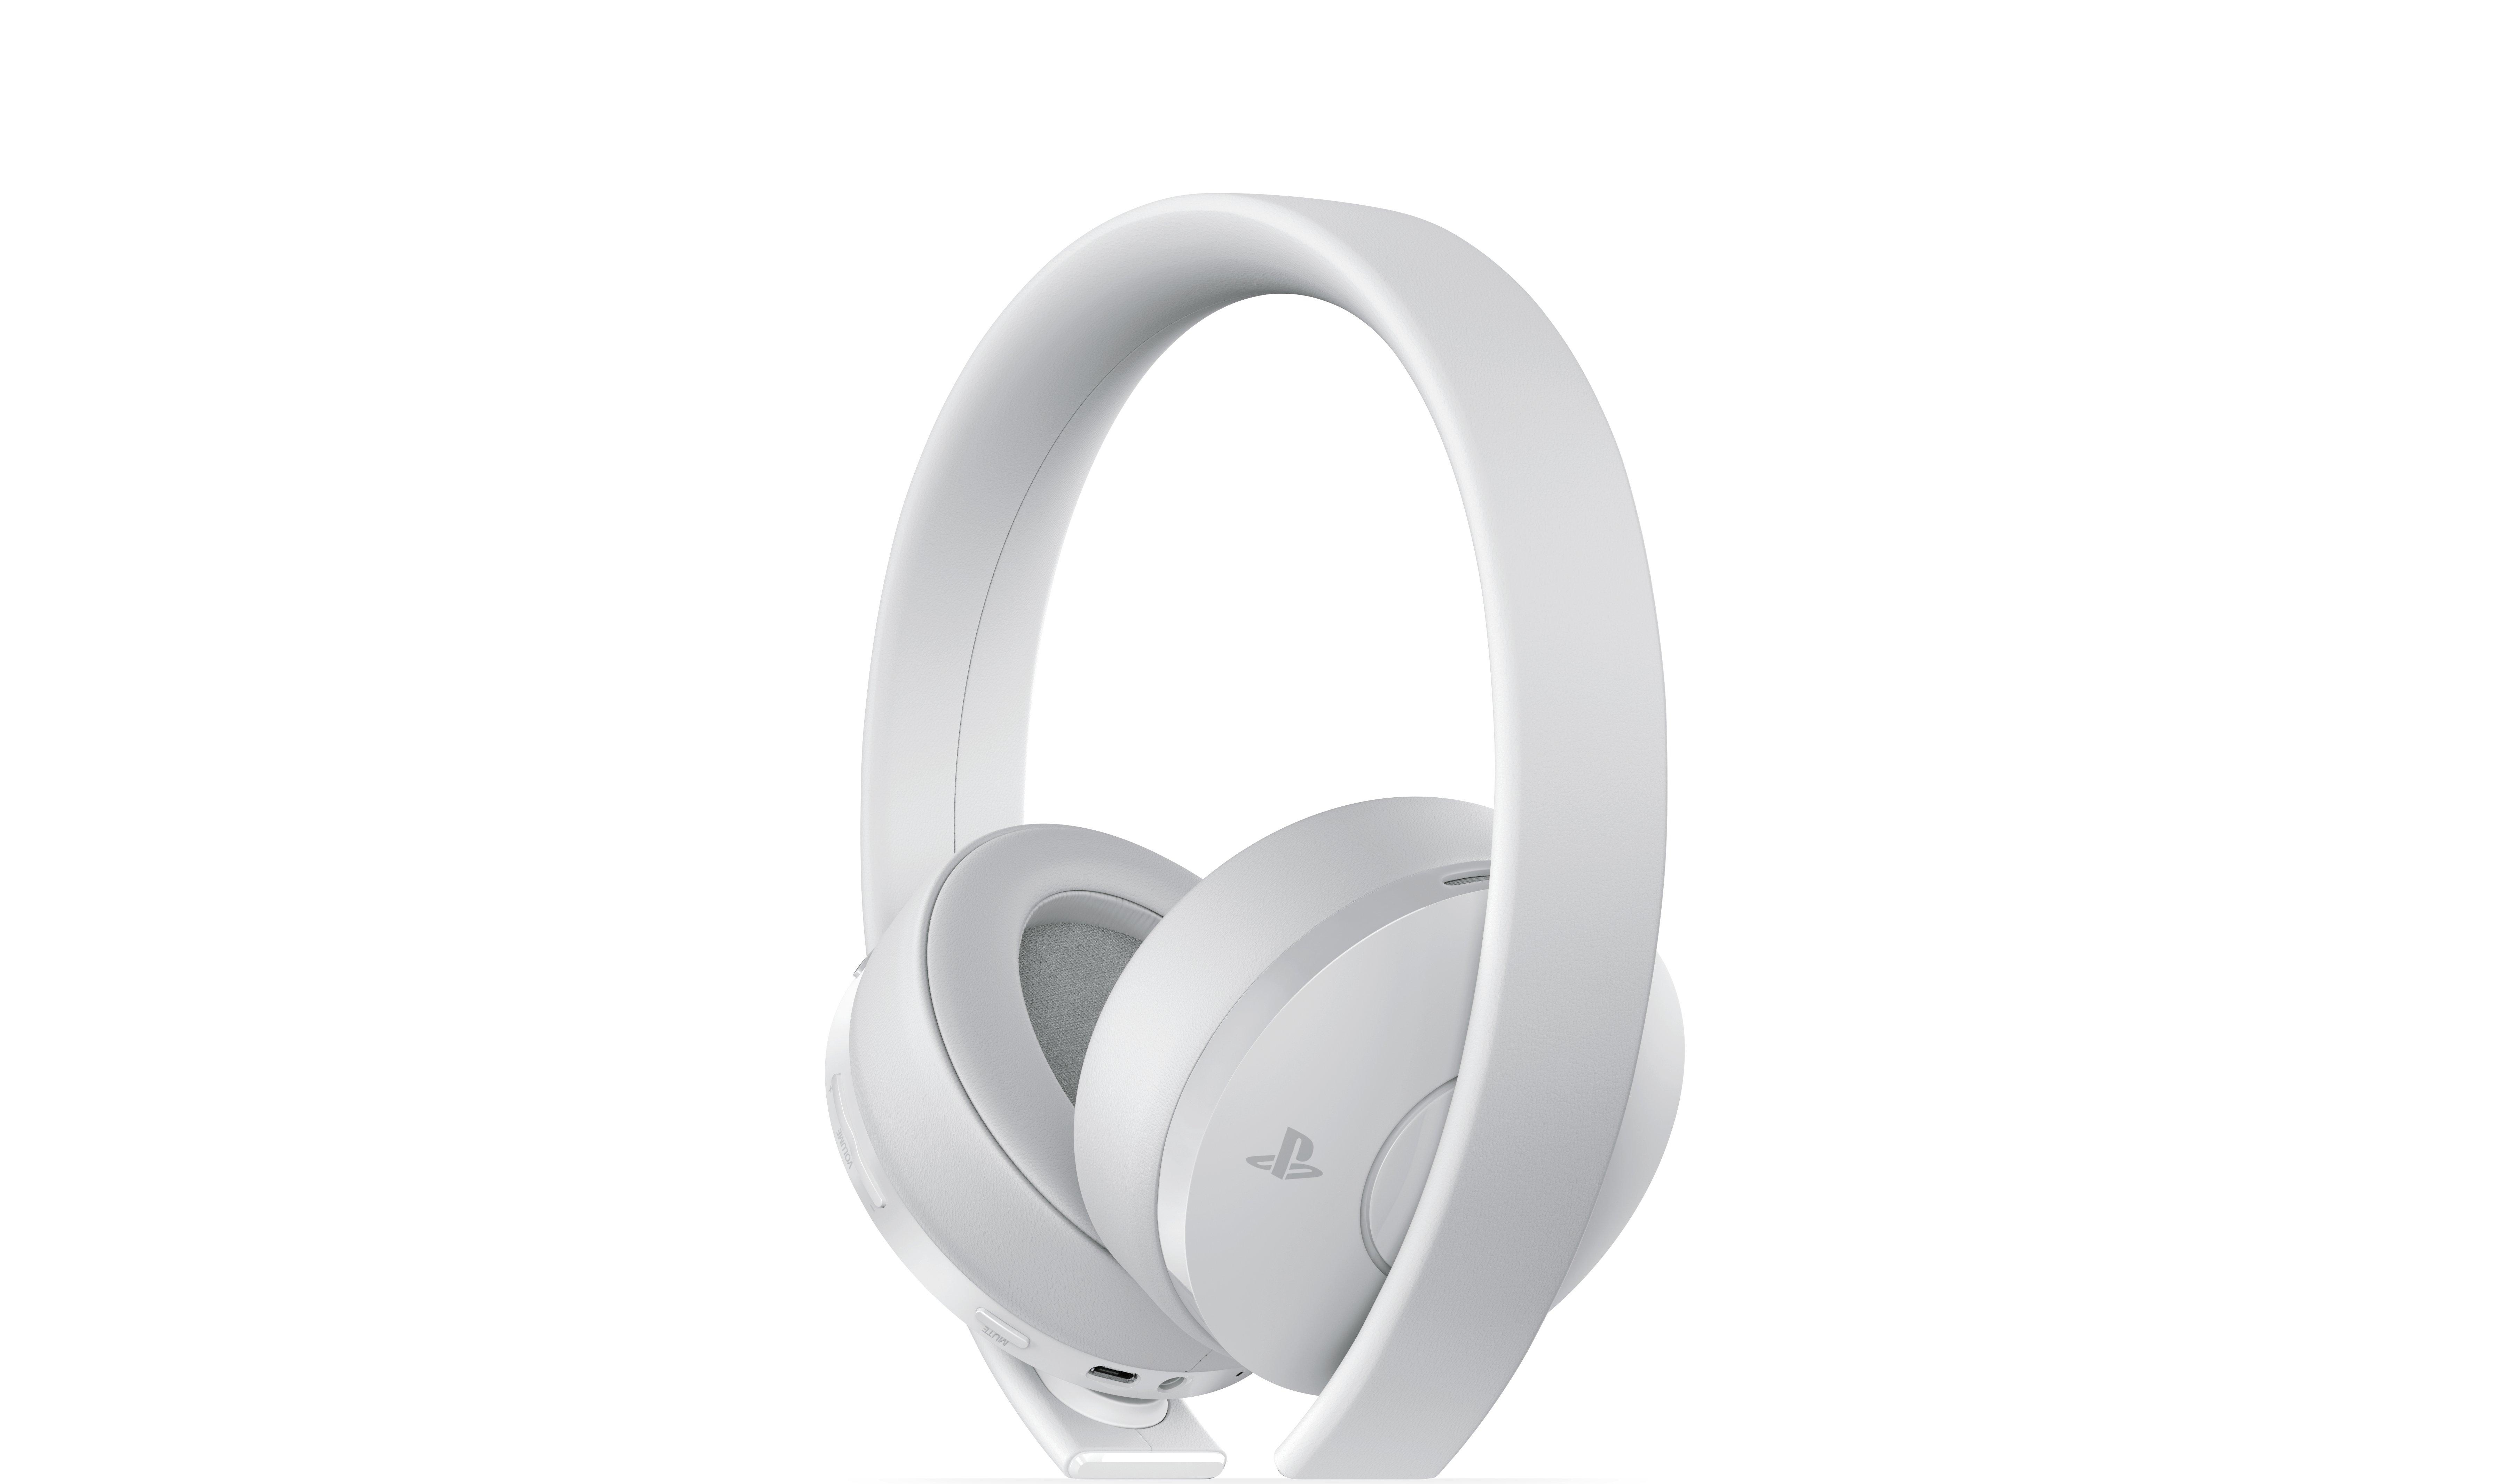 white ps4 wireless headset